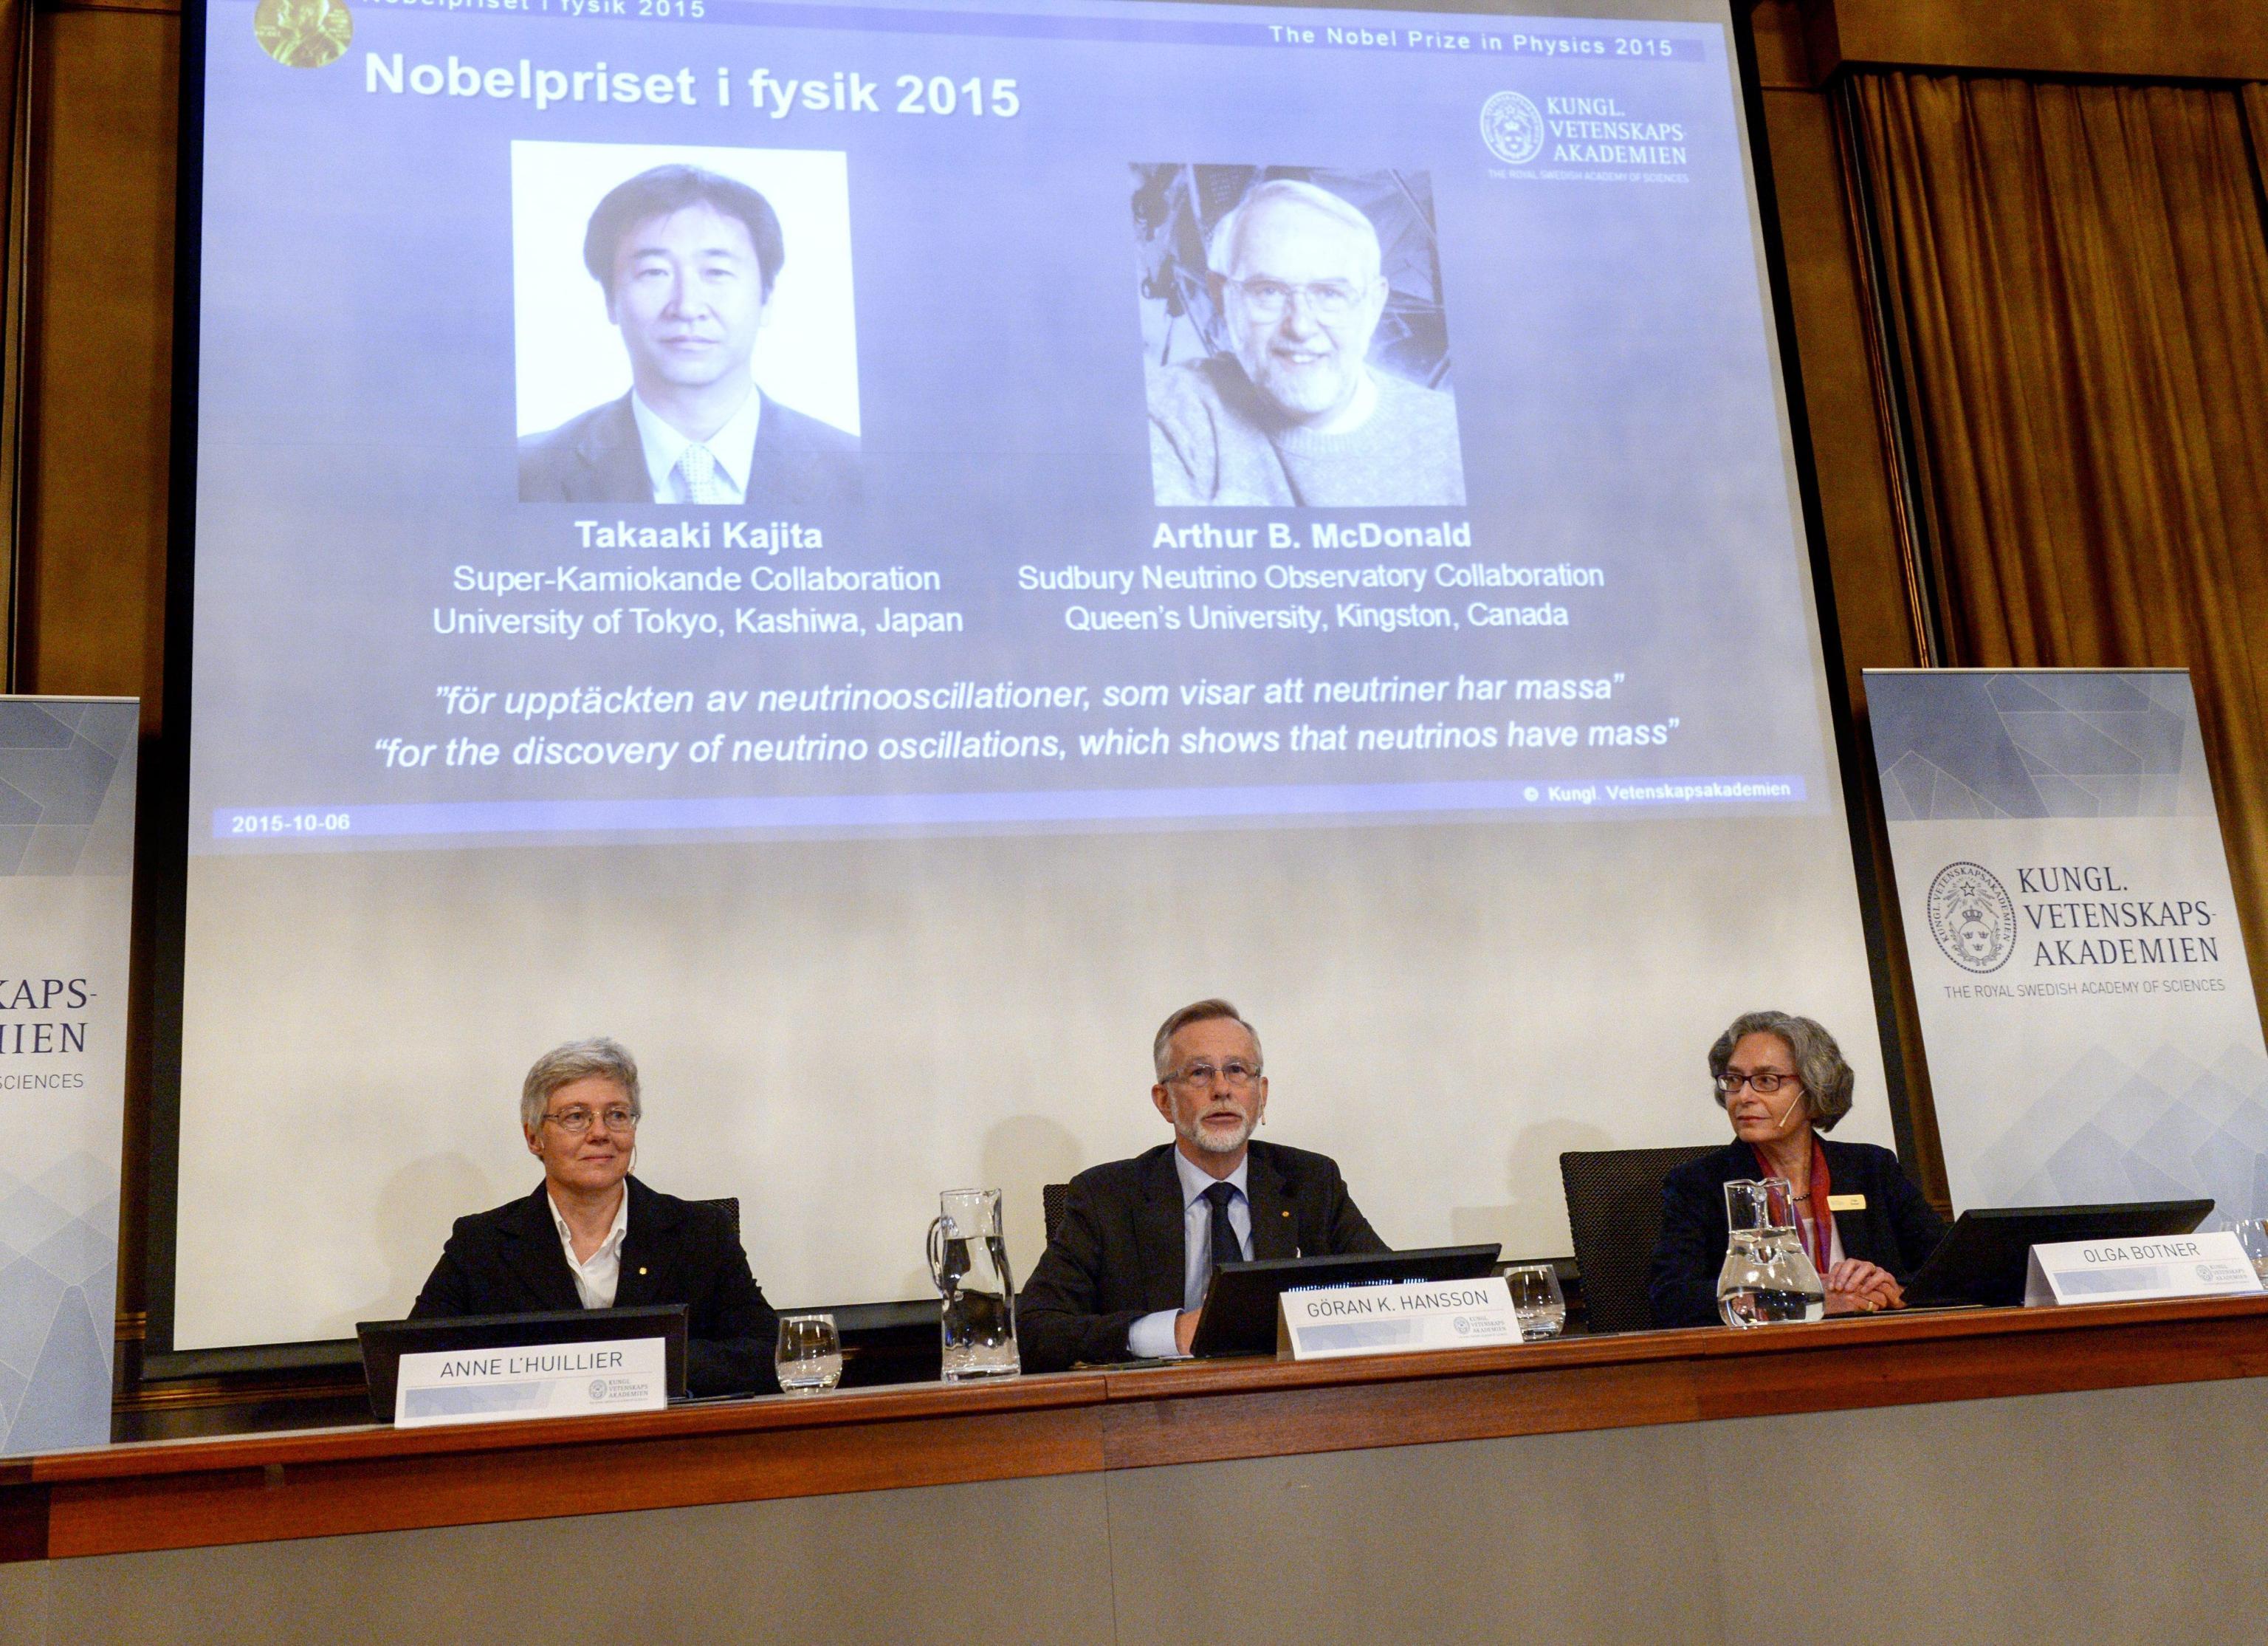 The Nobel judges awarded the Nobel physics prize jointly to Takaaki Kajita of Japan and Arthur B McDonald of Canada 'for the discovery of neutrino oscillations'